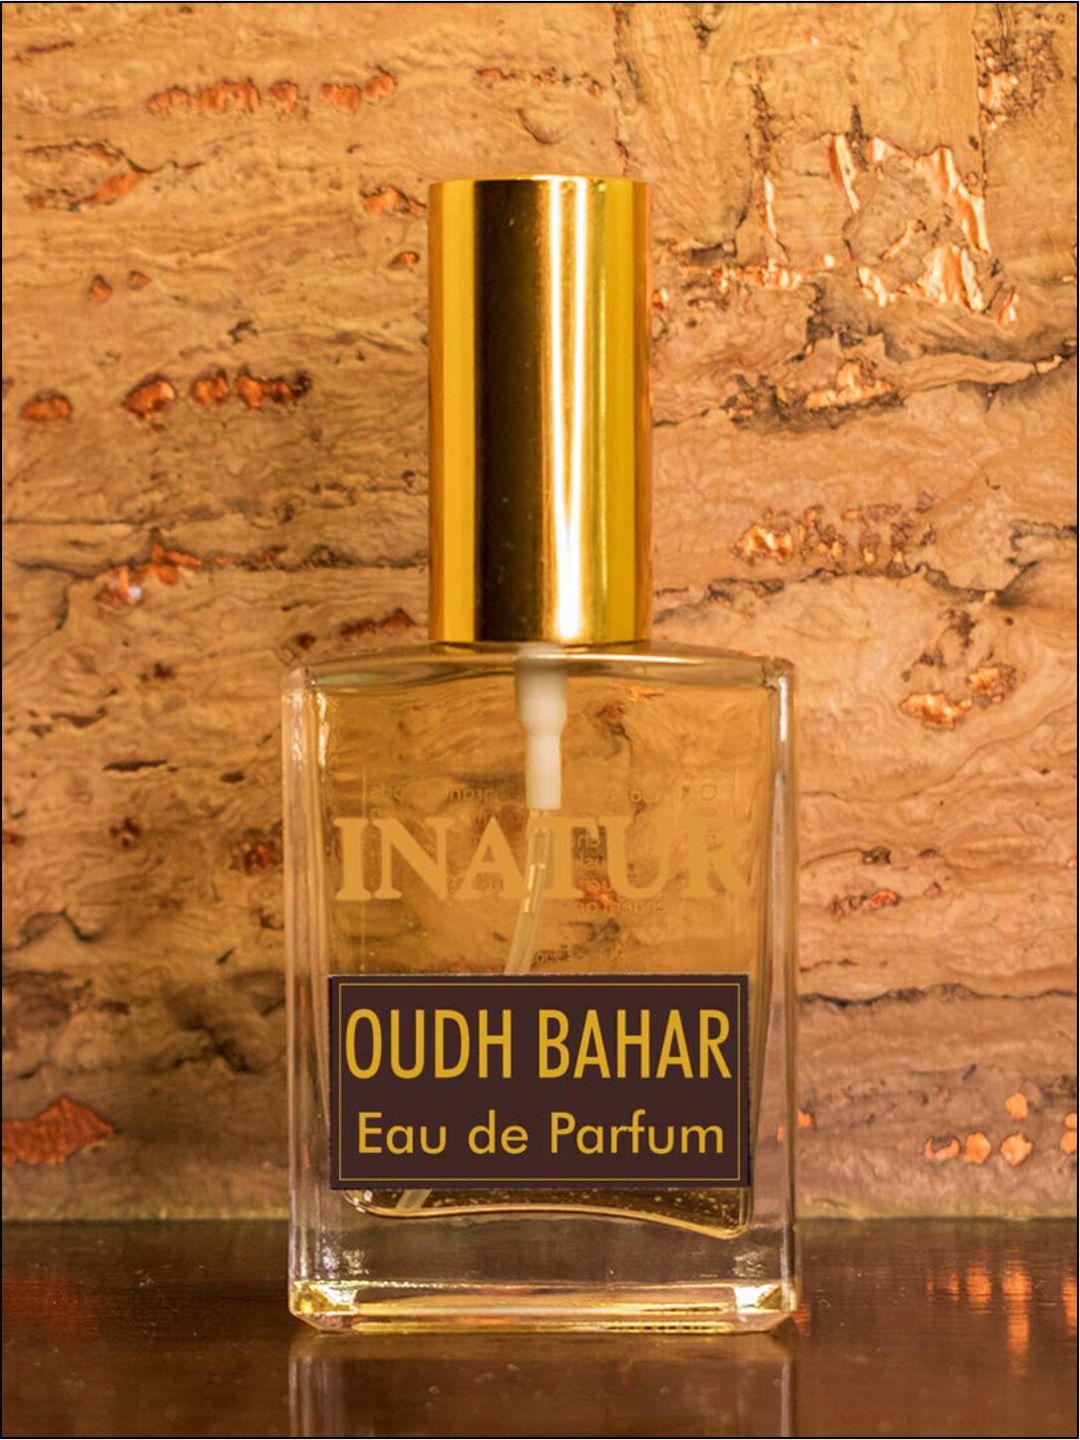 Inatur Oudh Bahar Eau De Parfum 50 ml Price in India